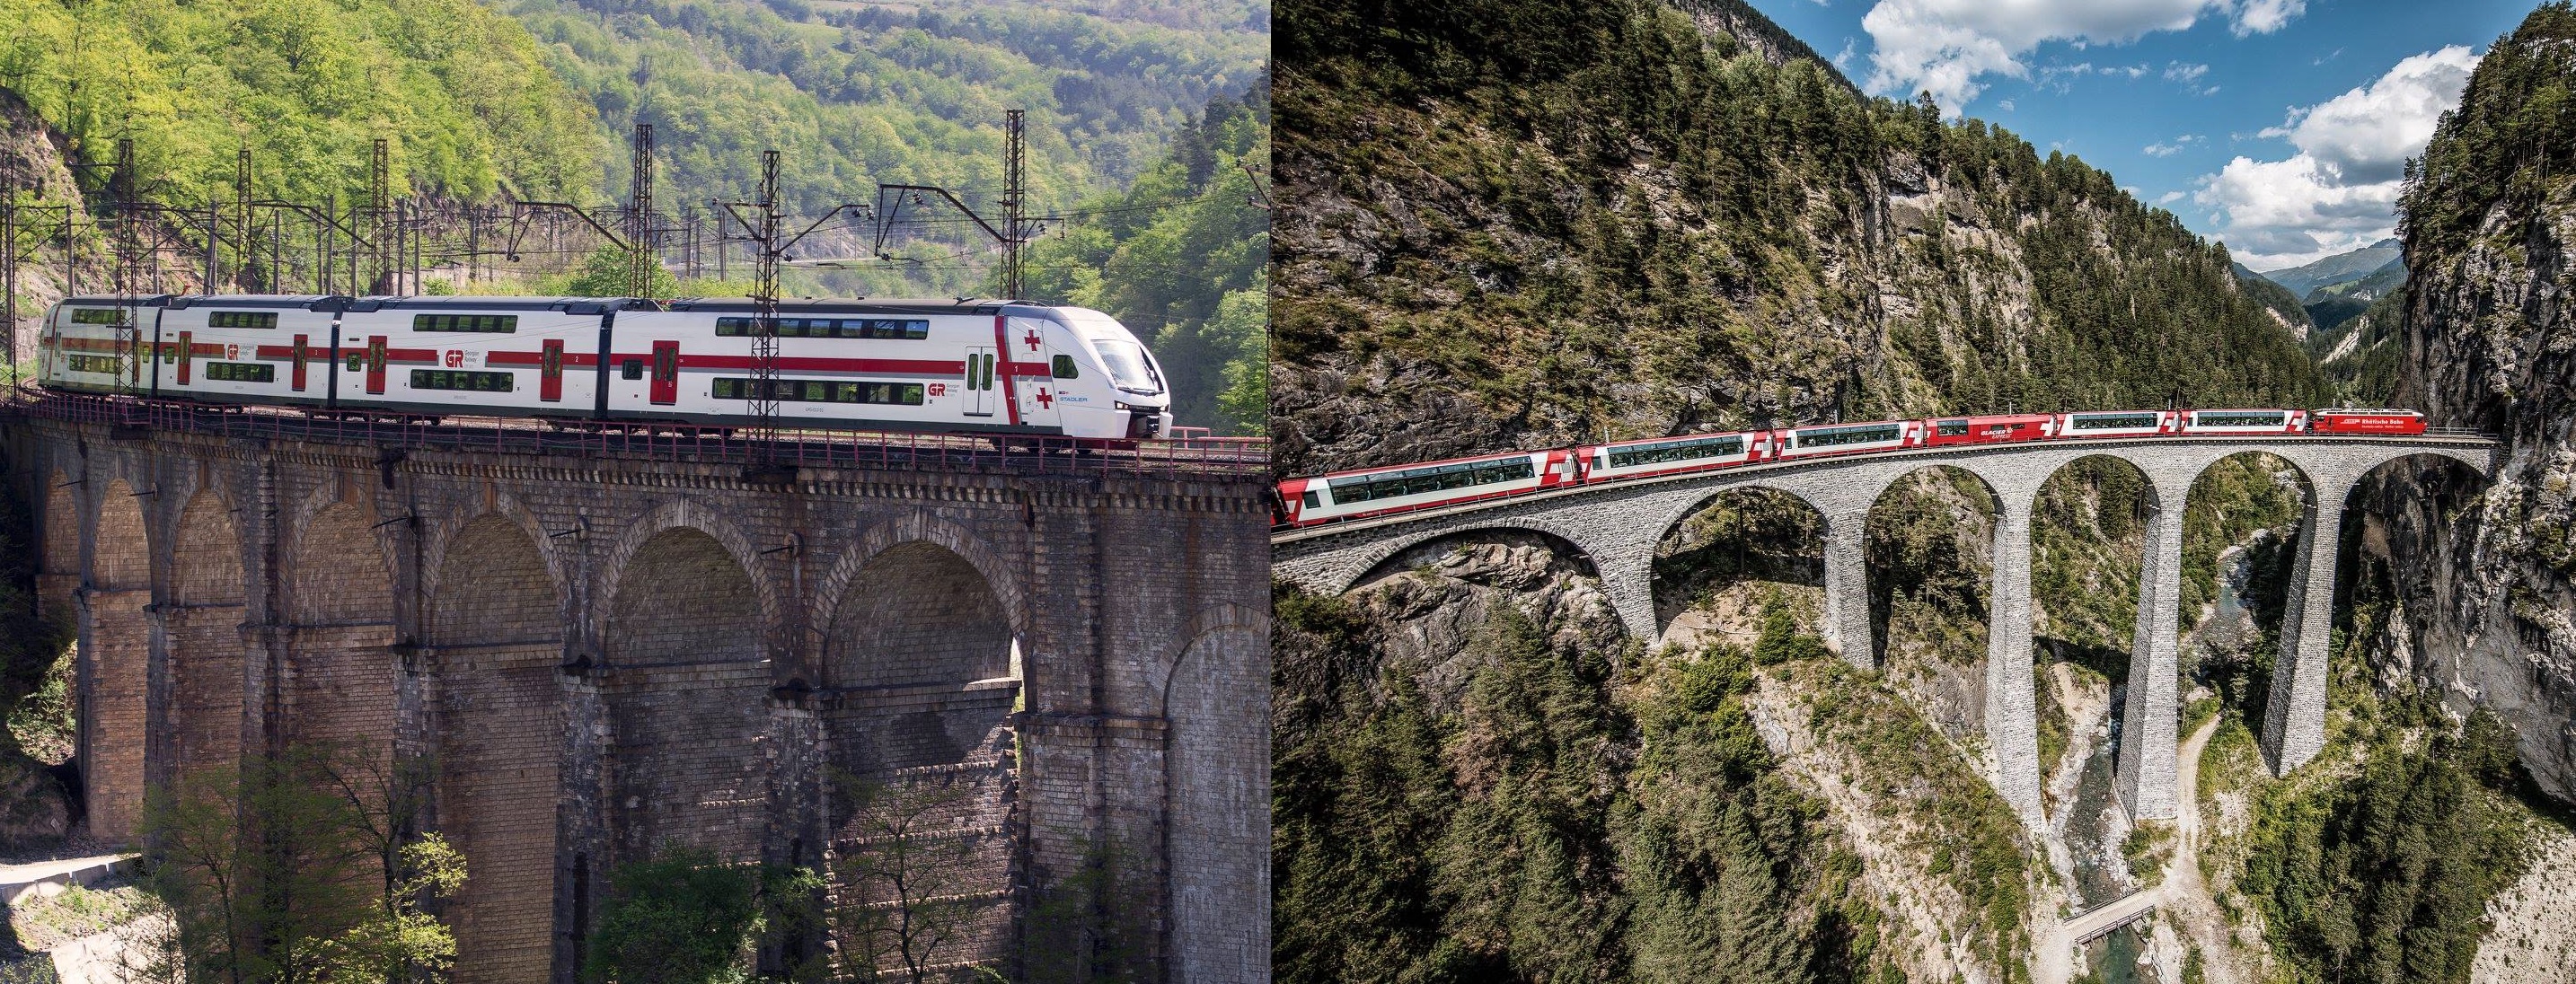 27982890 1992836257623384 7885844071618801890 o новости Stadler Rail AG, Грузия, поезд, Швейцария